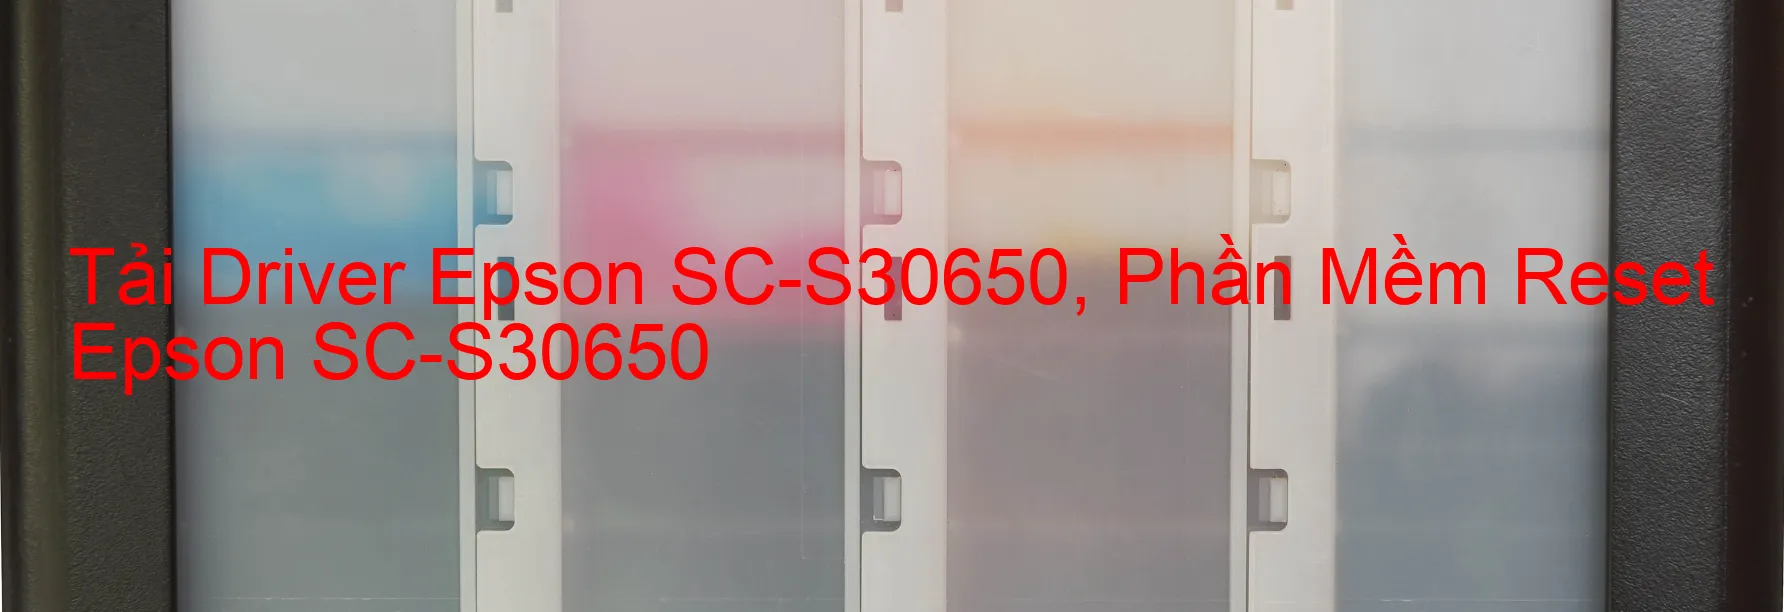 Driver Epson SC-S30650, Phần Mềm Reset Epson SC-S30650